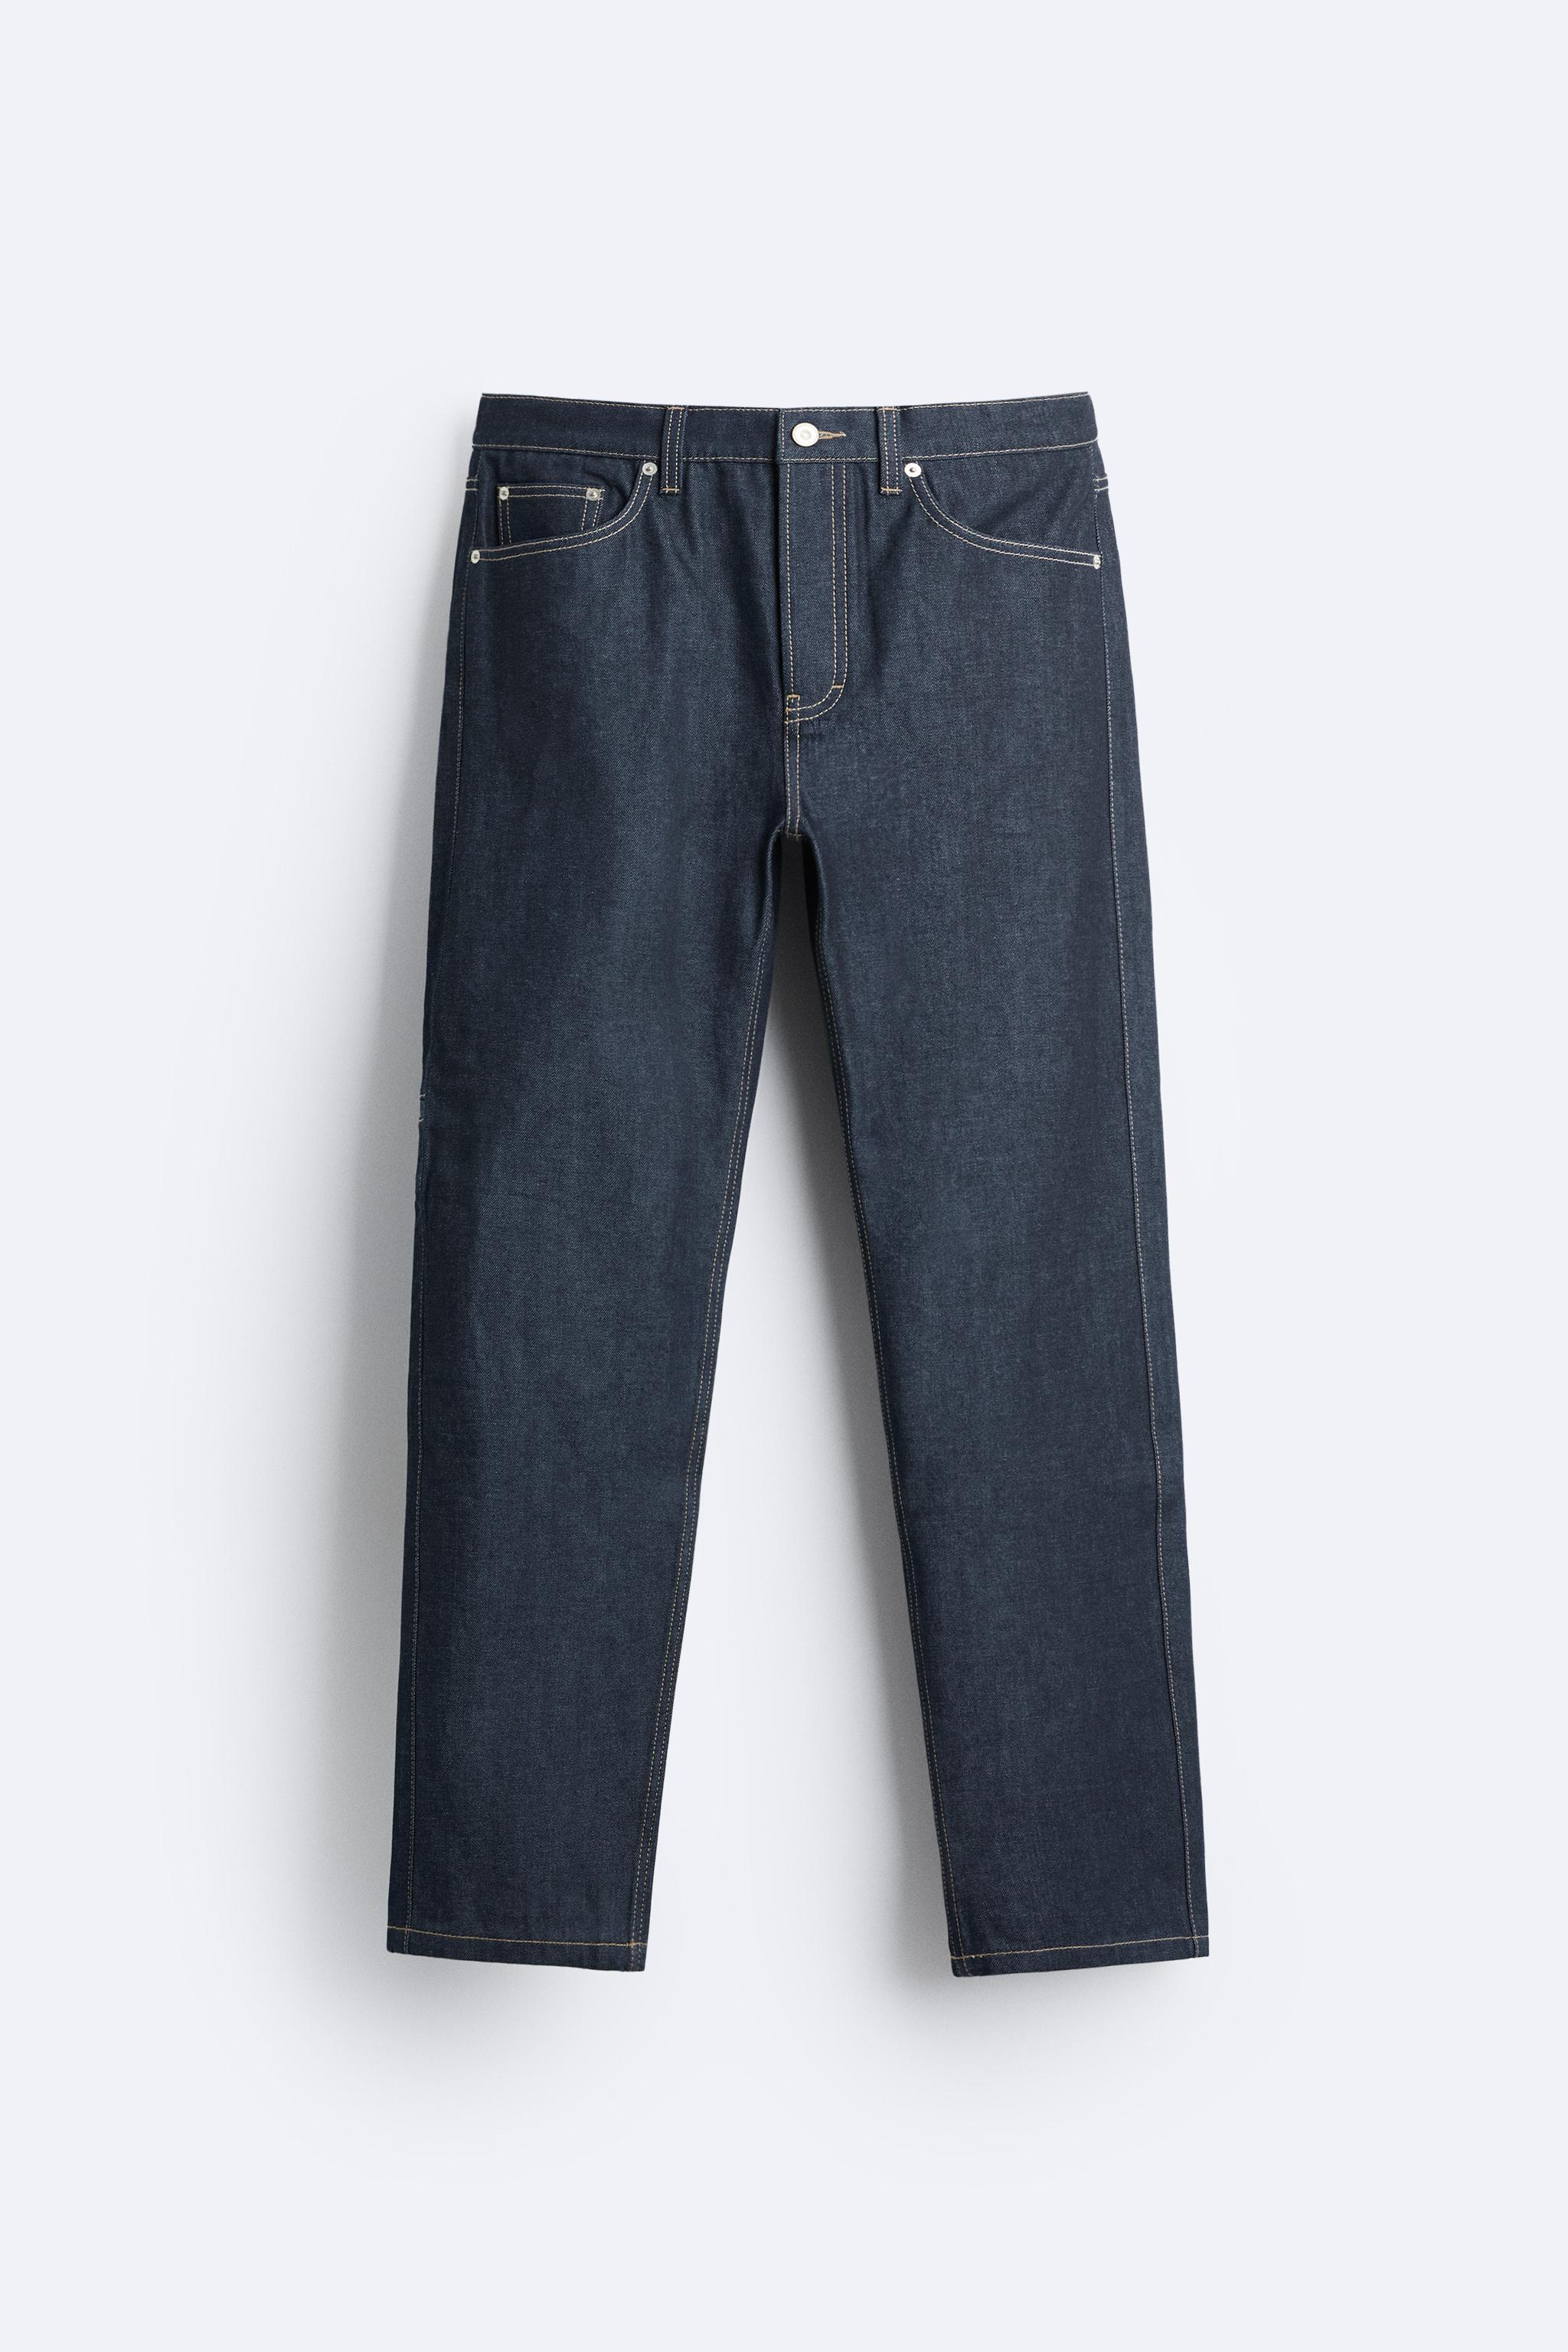 Zara Straight Fit High Rise Jeans Size 34 (Women's U.S. Size 2 Pants) Blue